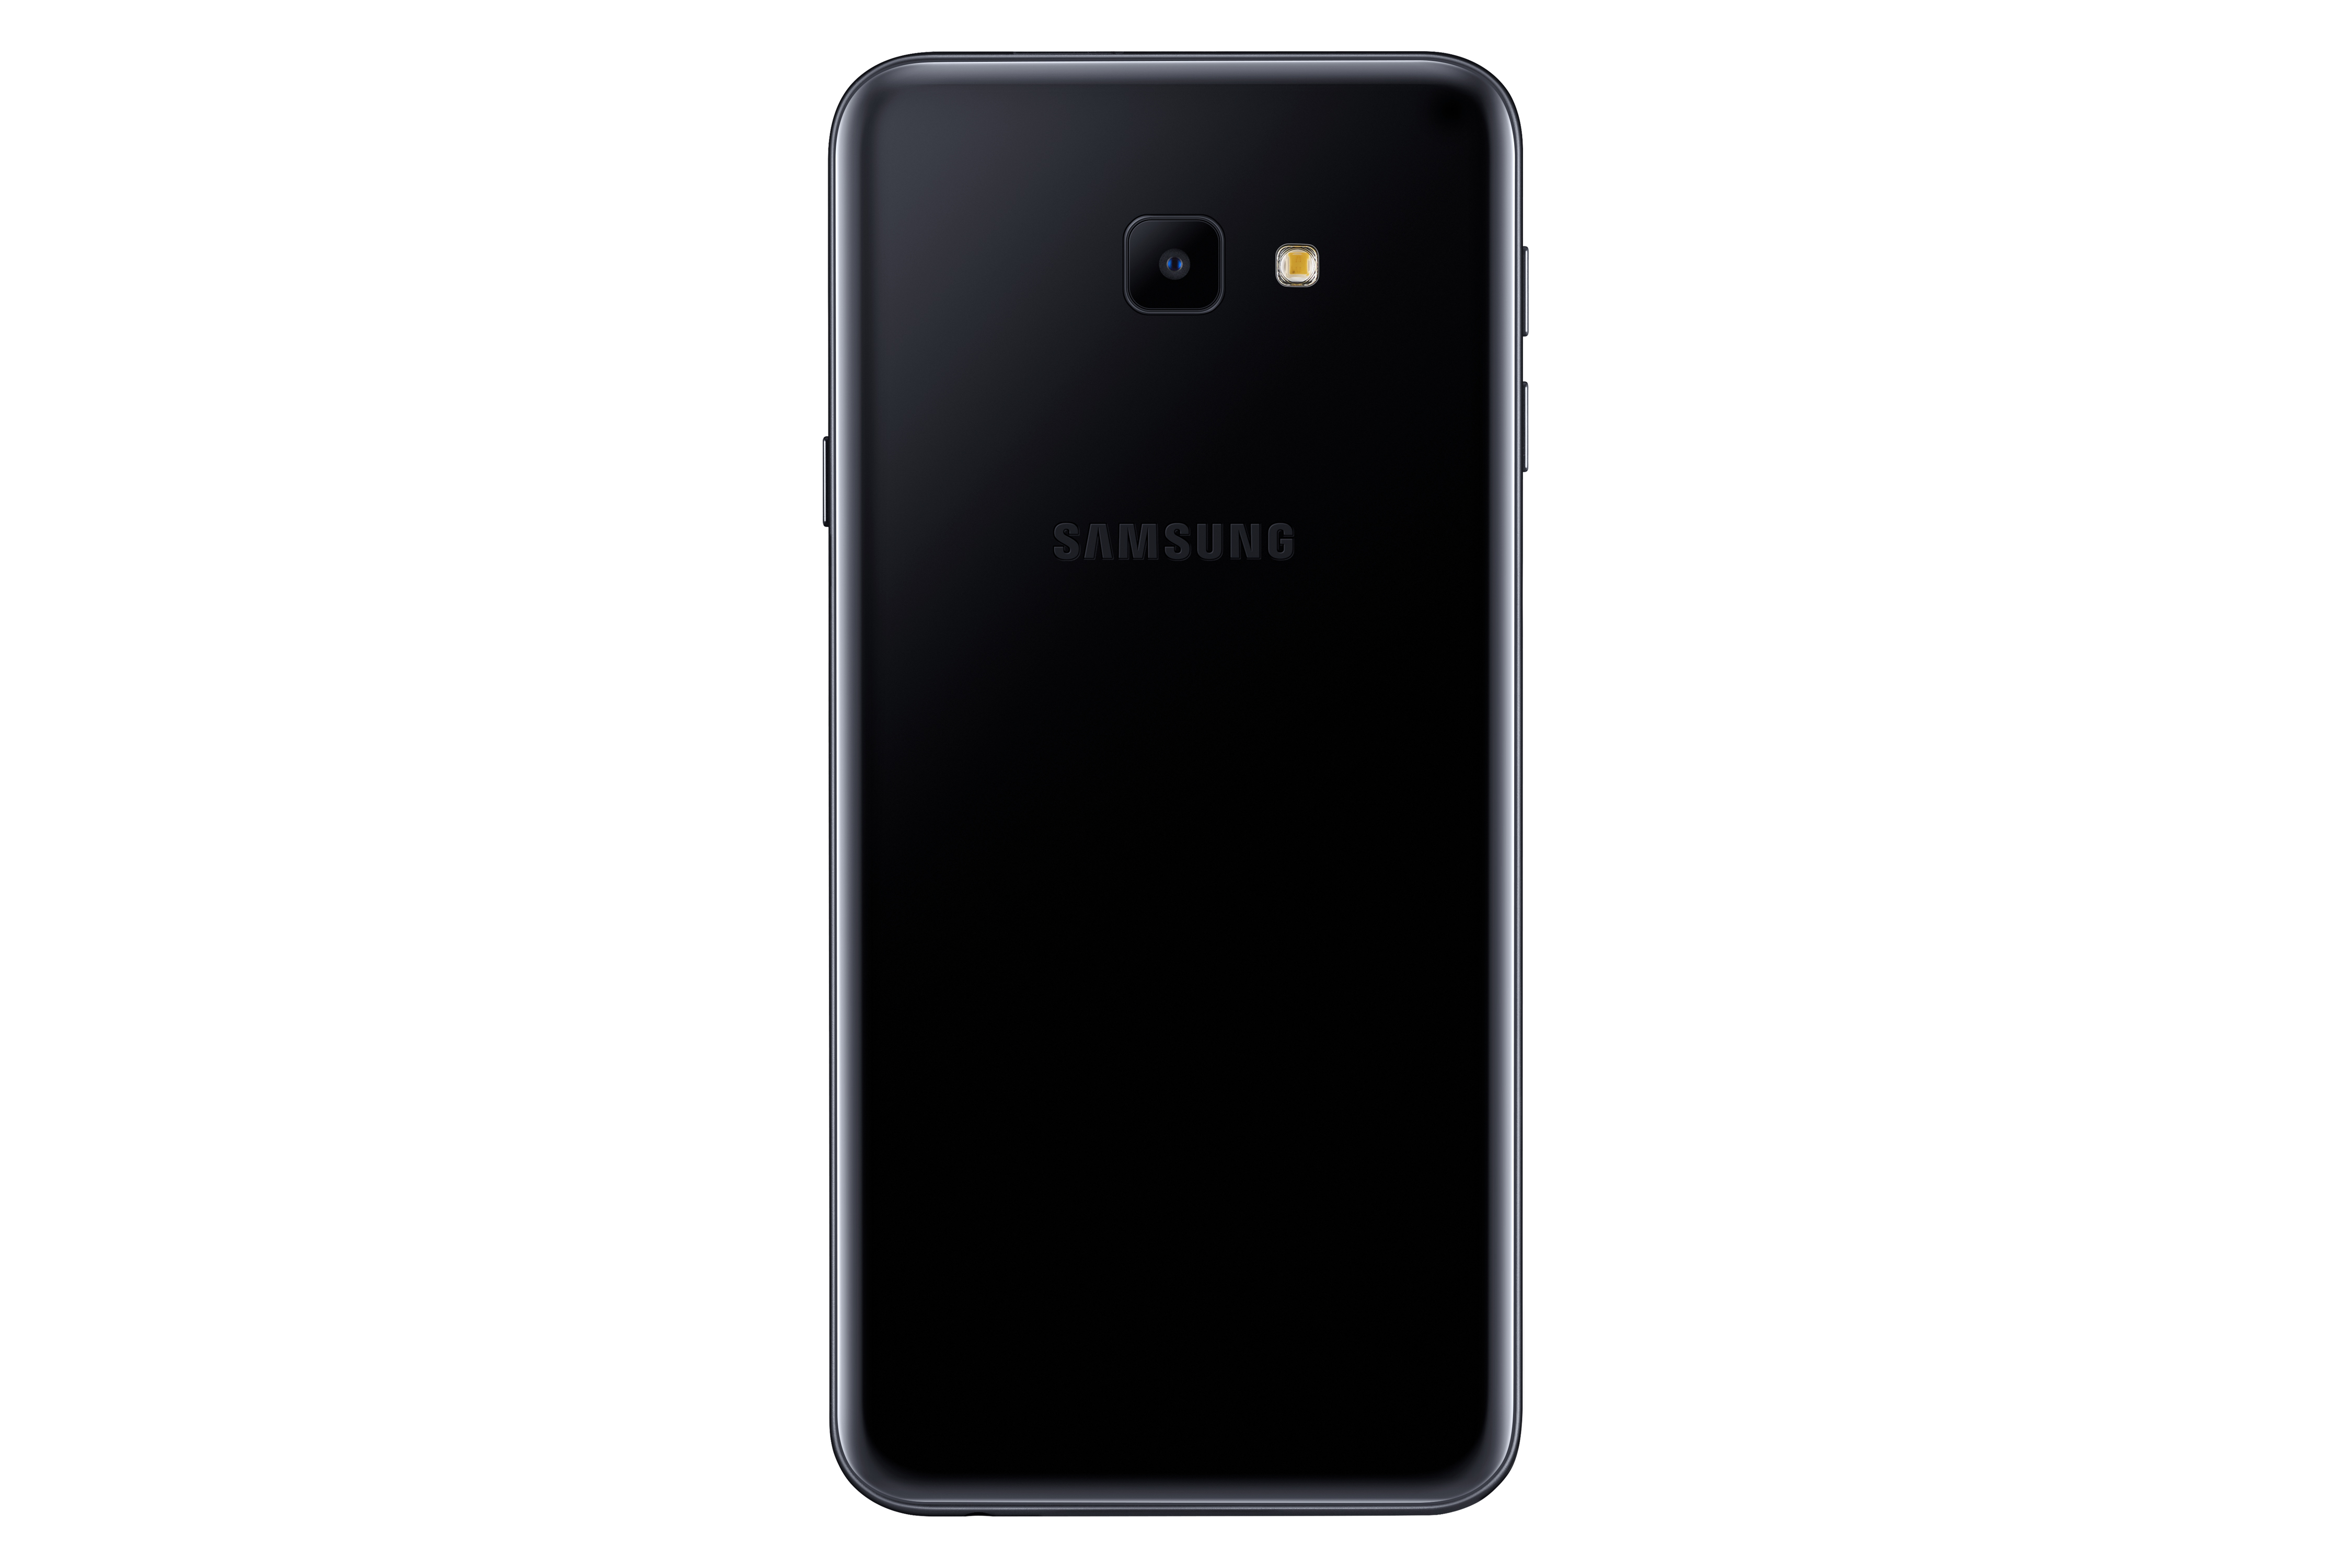 Samsung Galaxy J4 Core